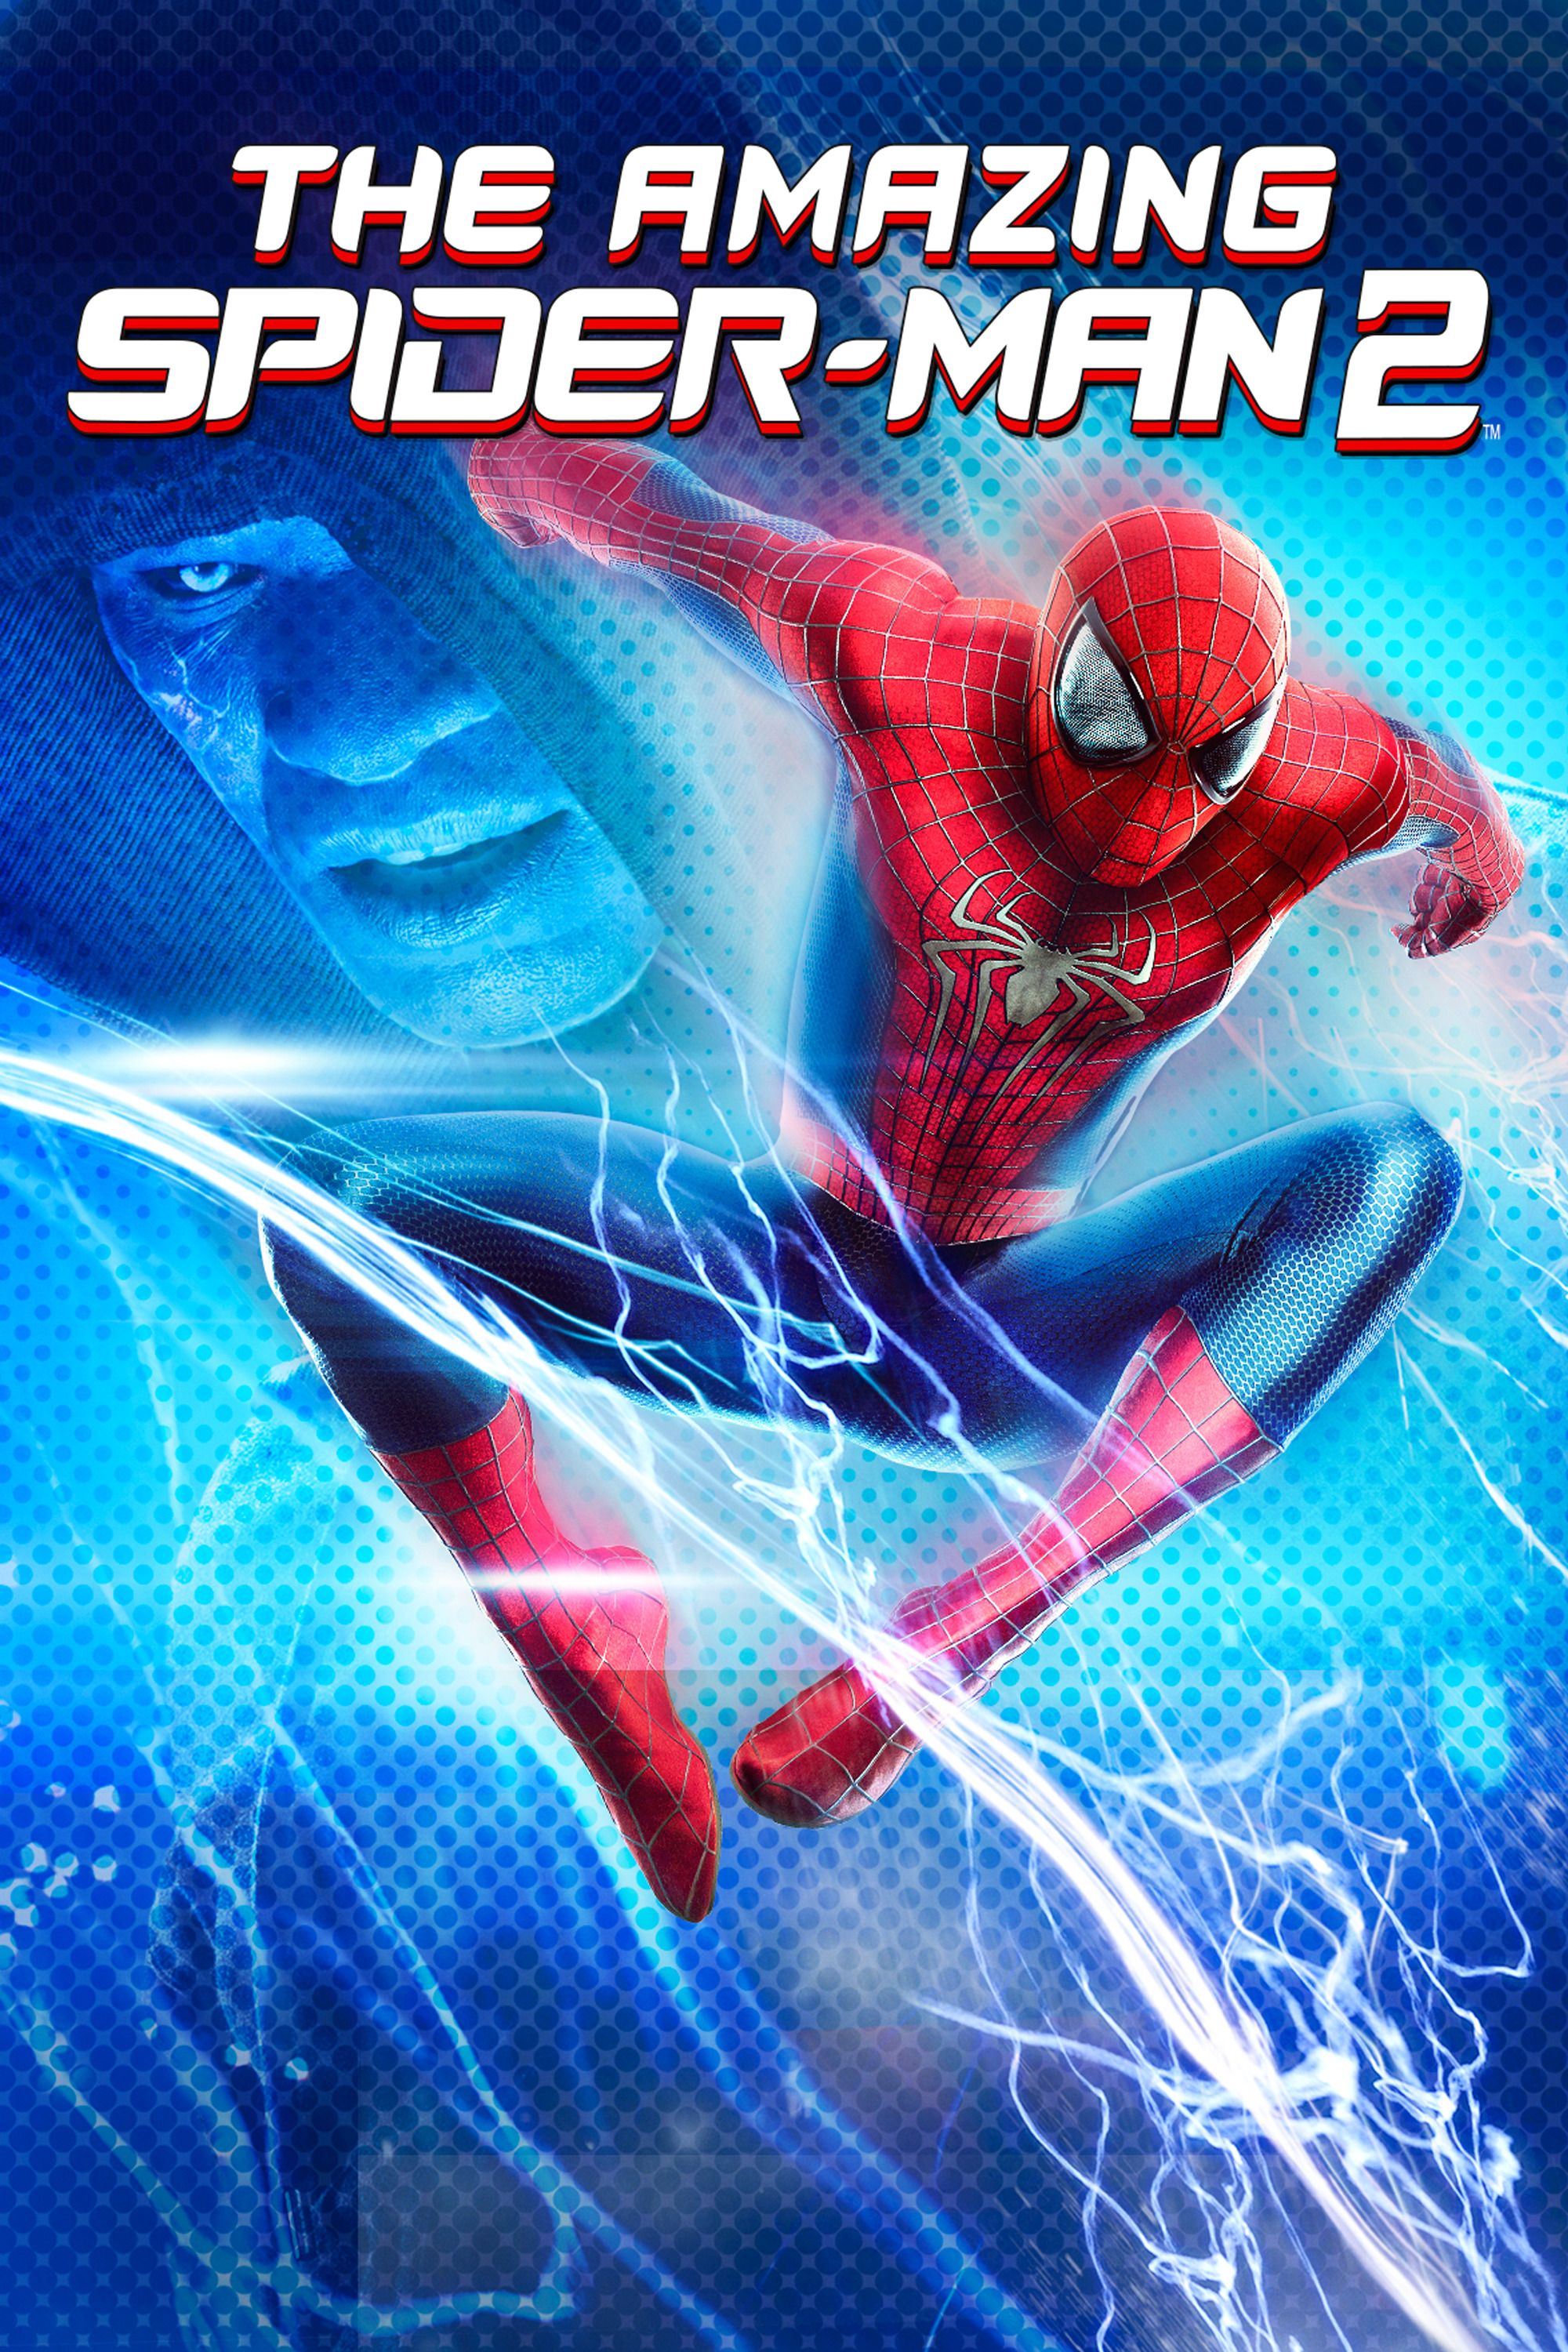 The amazing spiderman 2 free online